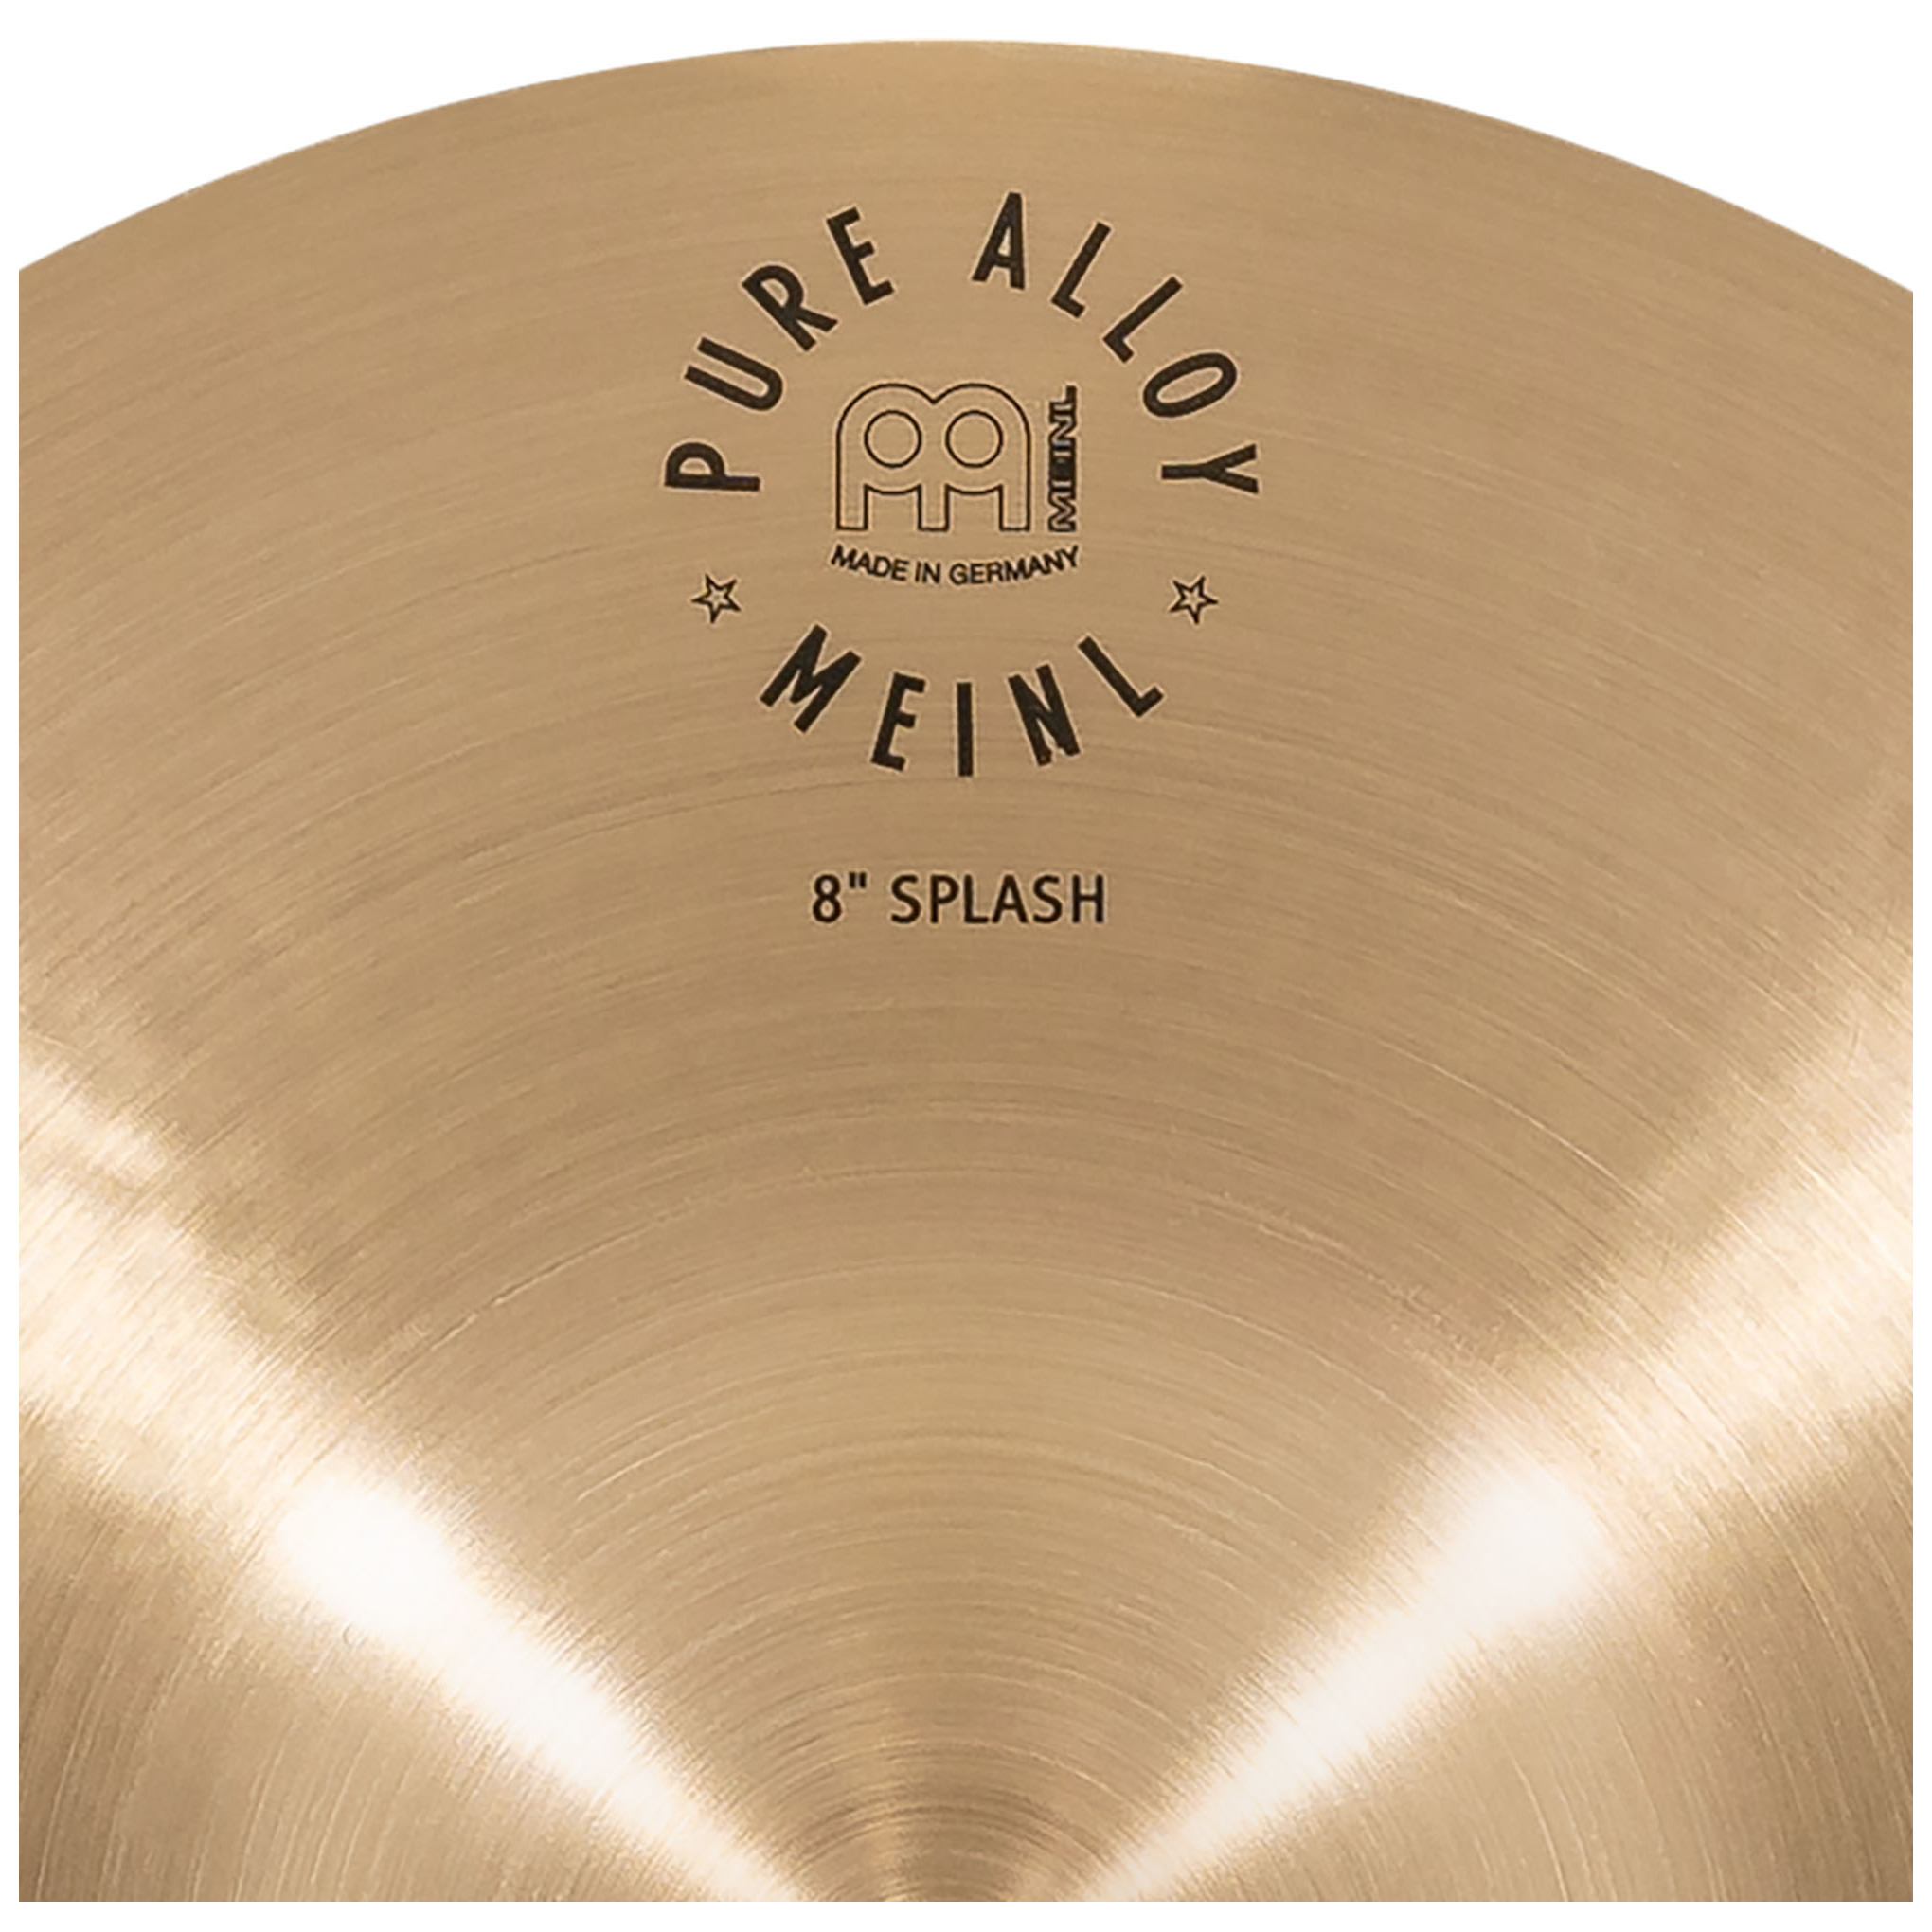 Meinl Cymbals PA8S - 8" Pure Alloy Splash 6